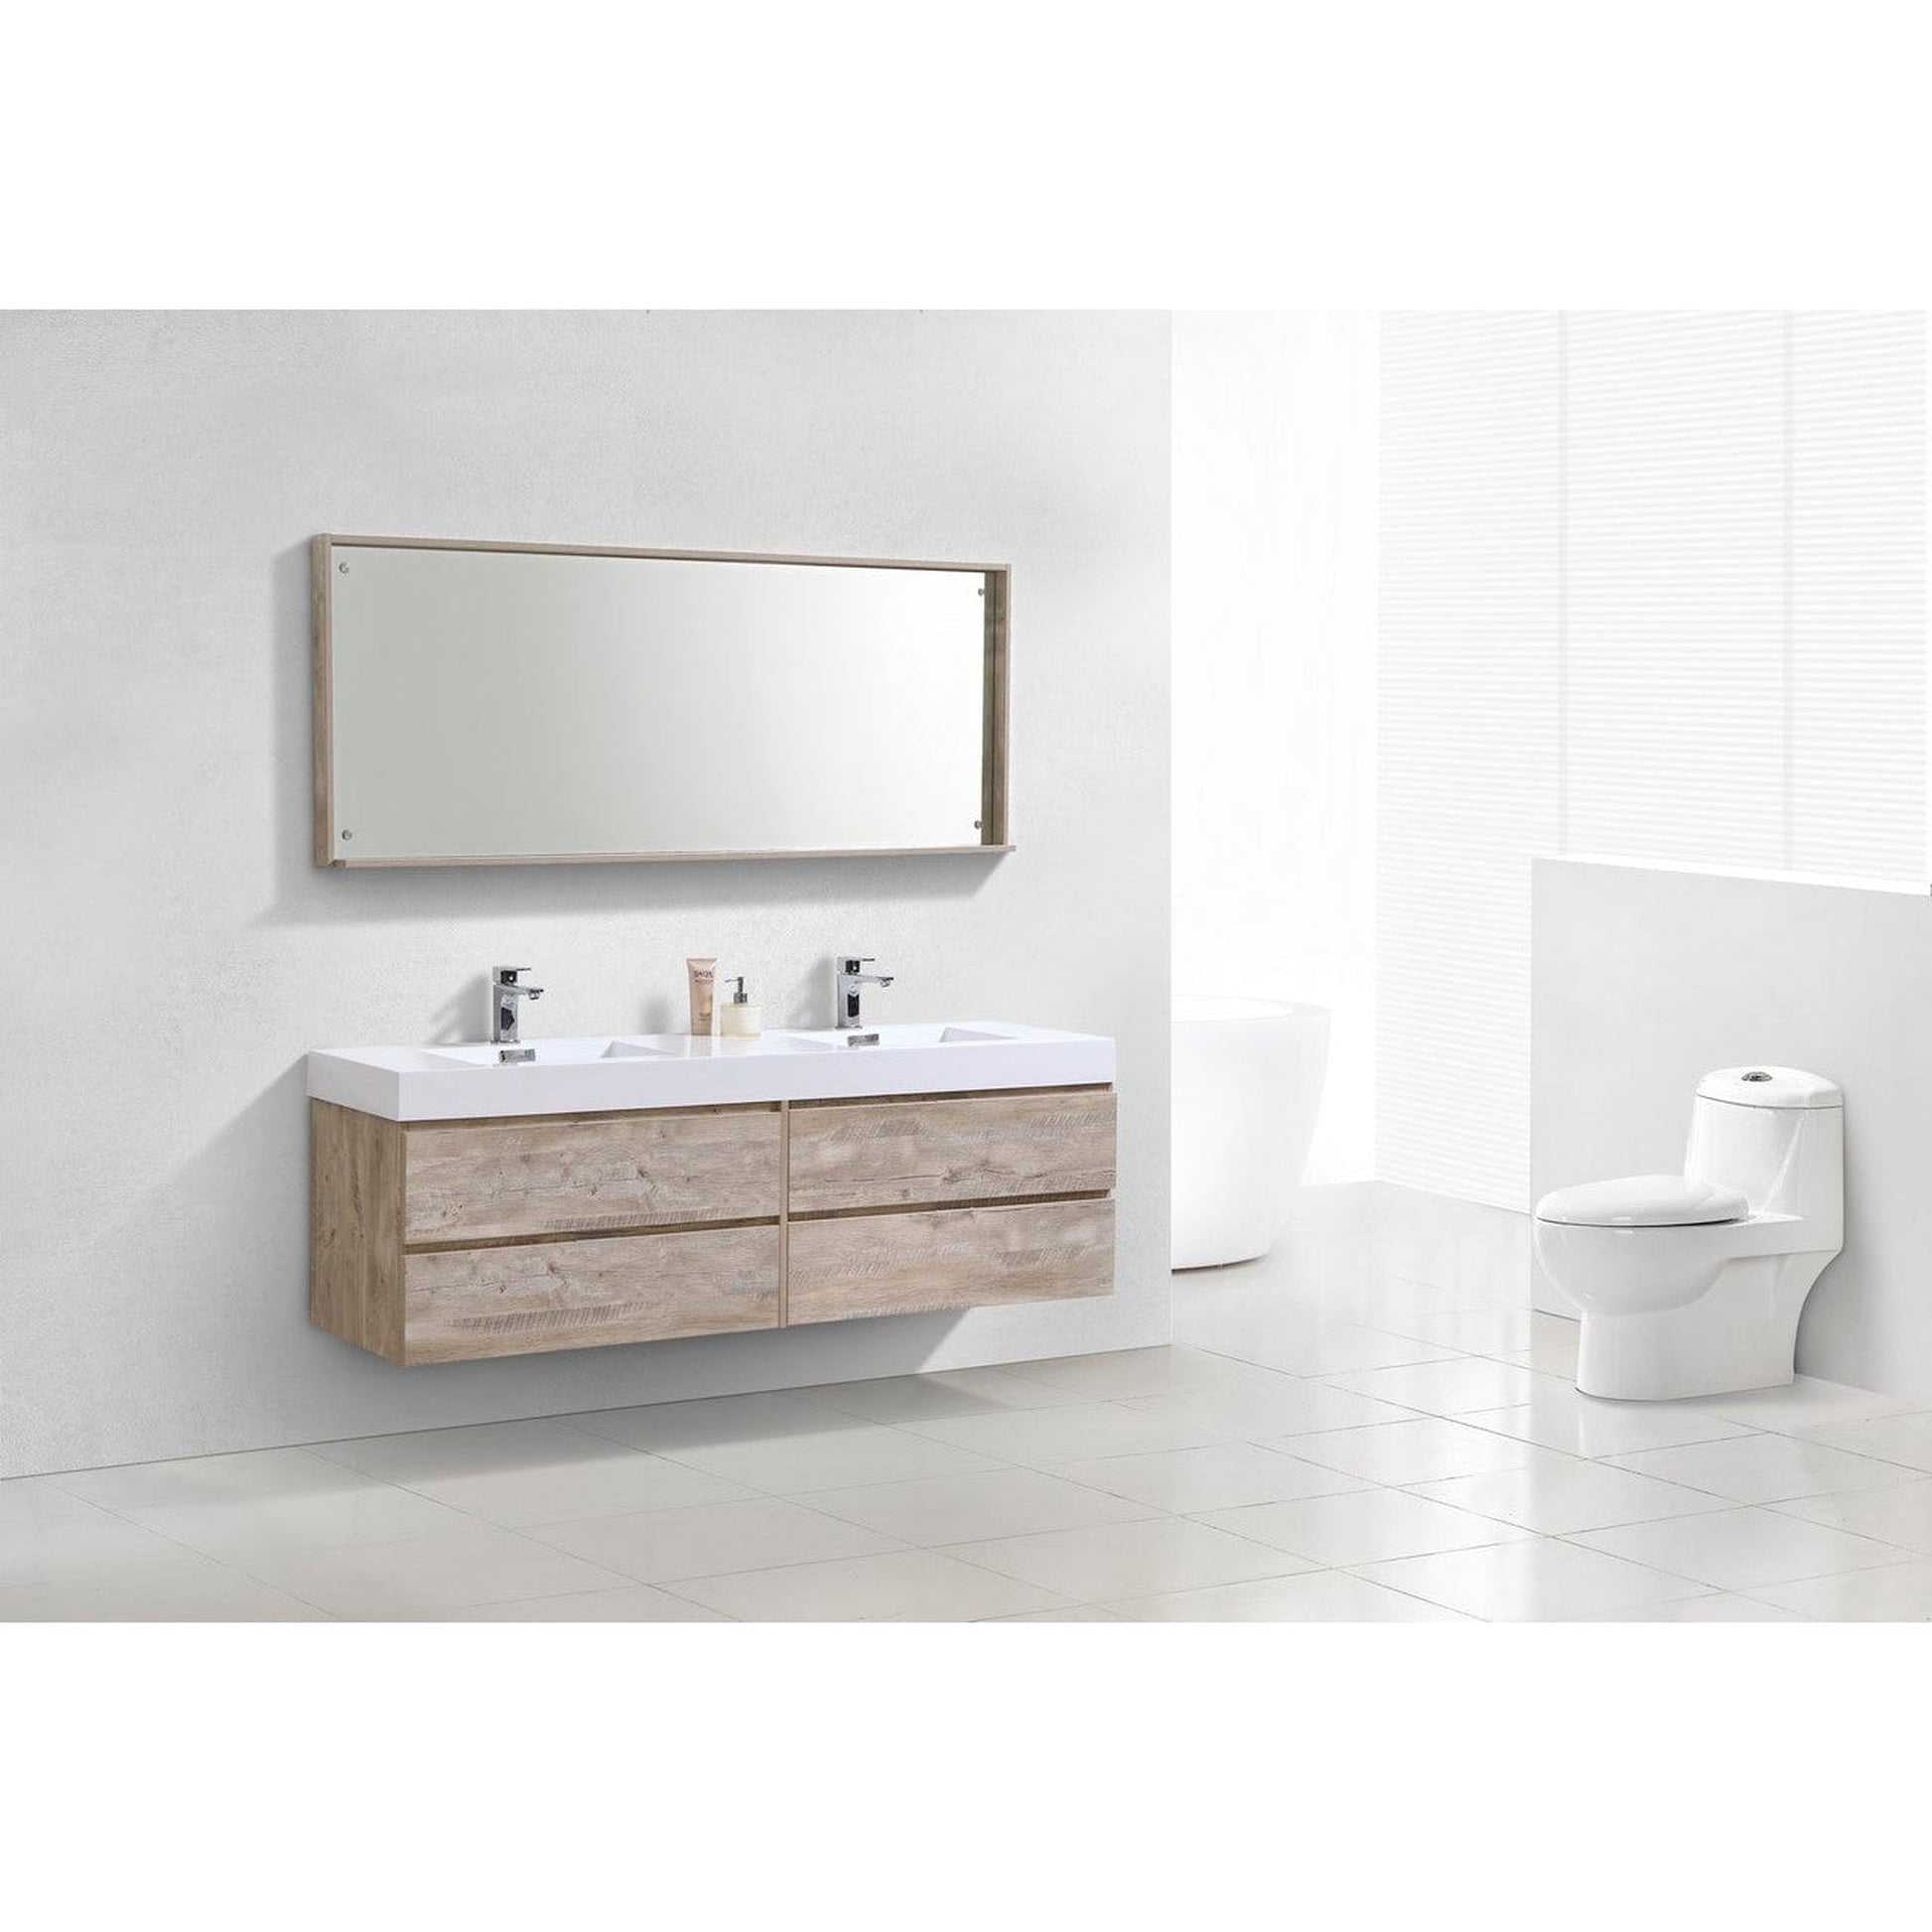 KubeBath Bliss 80" Nature Wood Wall-Mounted Modern Bathroom Vanity With Double Integrated Acrylic Sink With Overflow